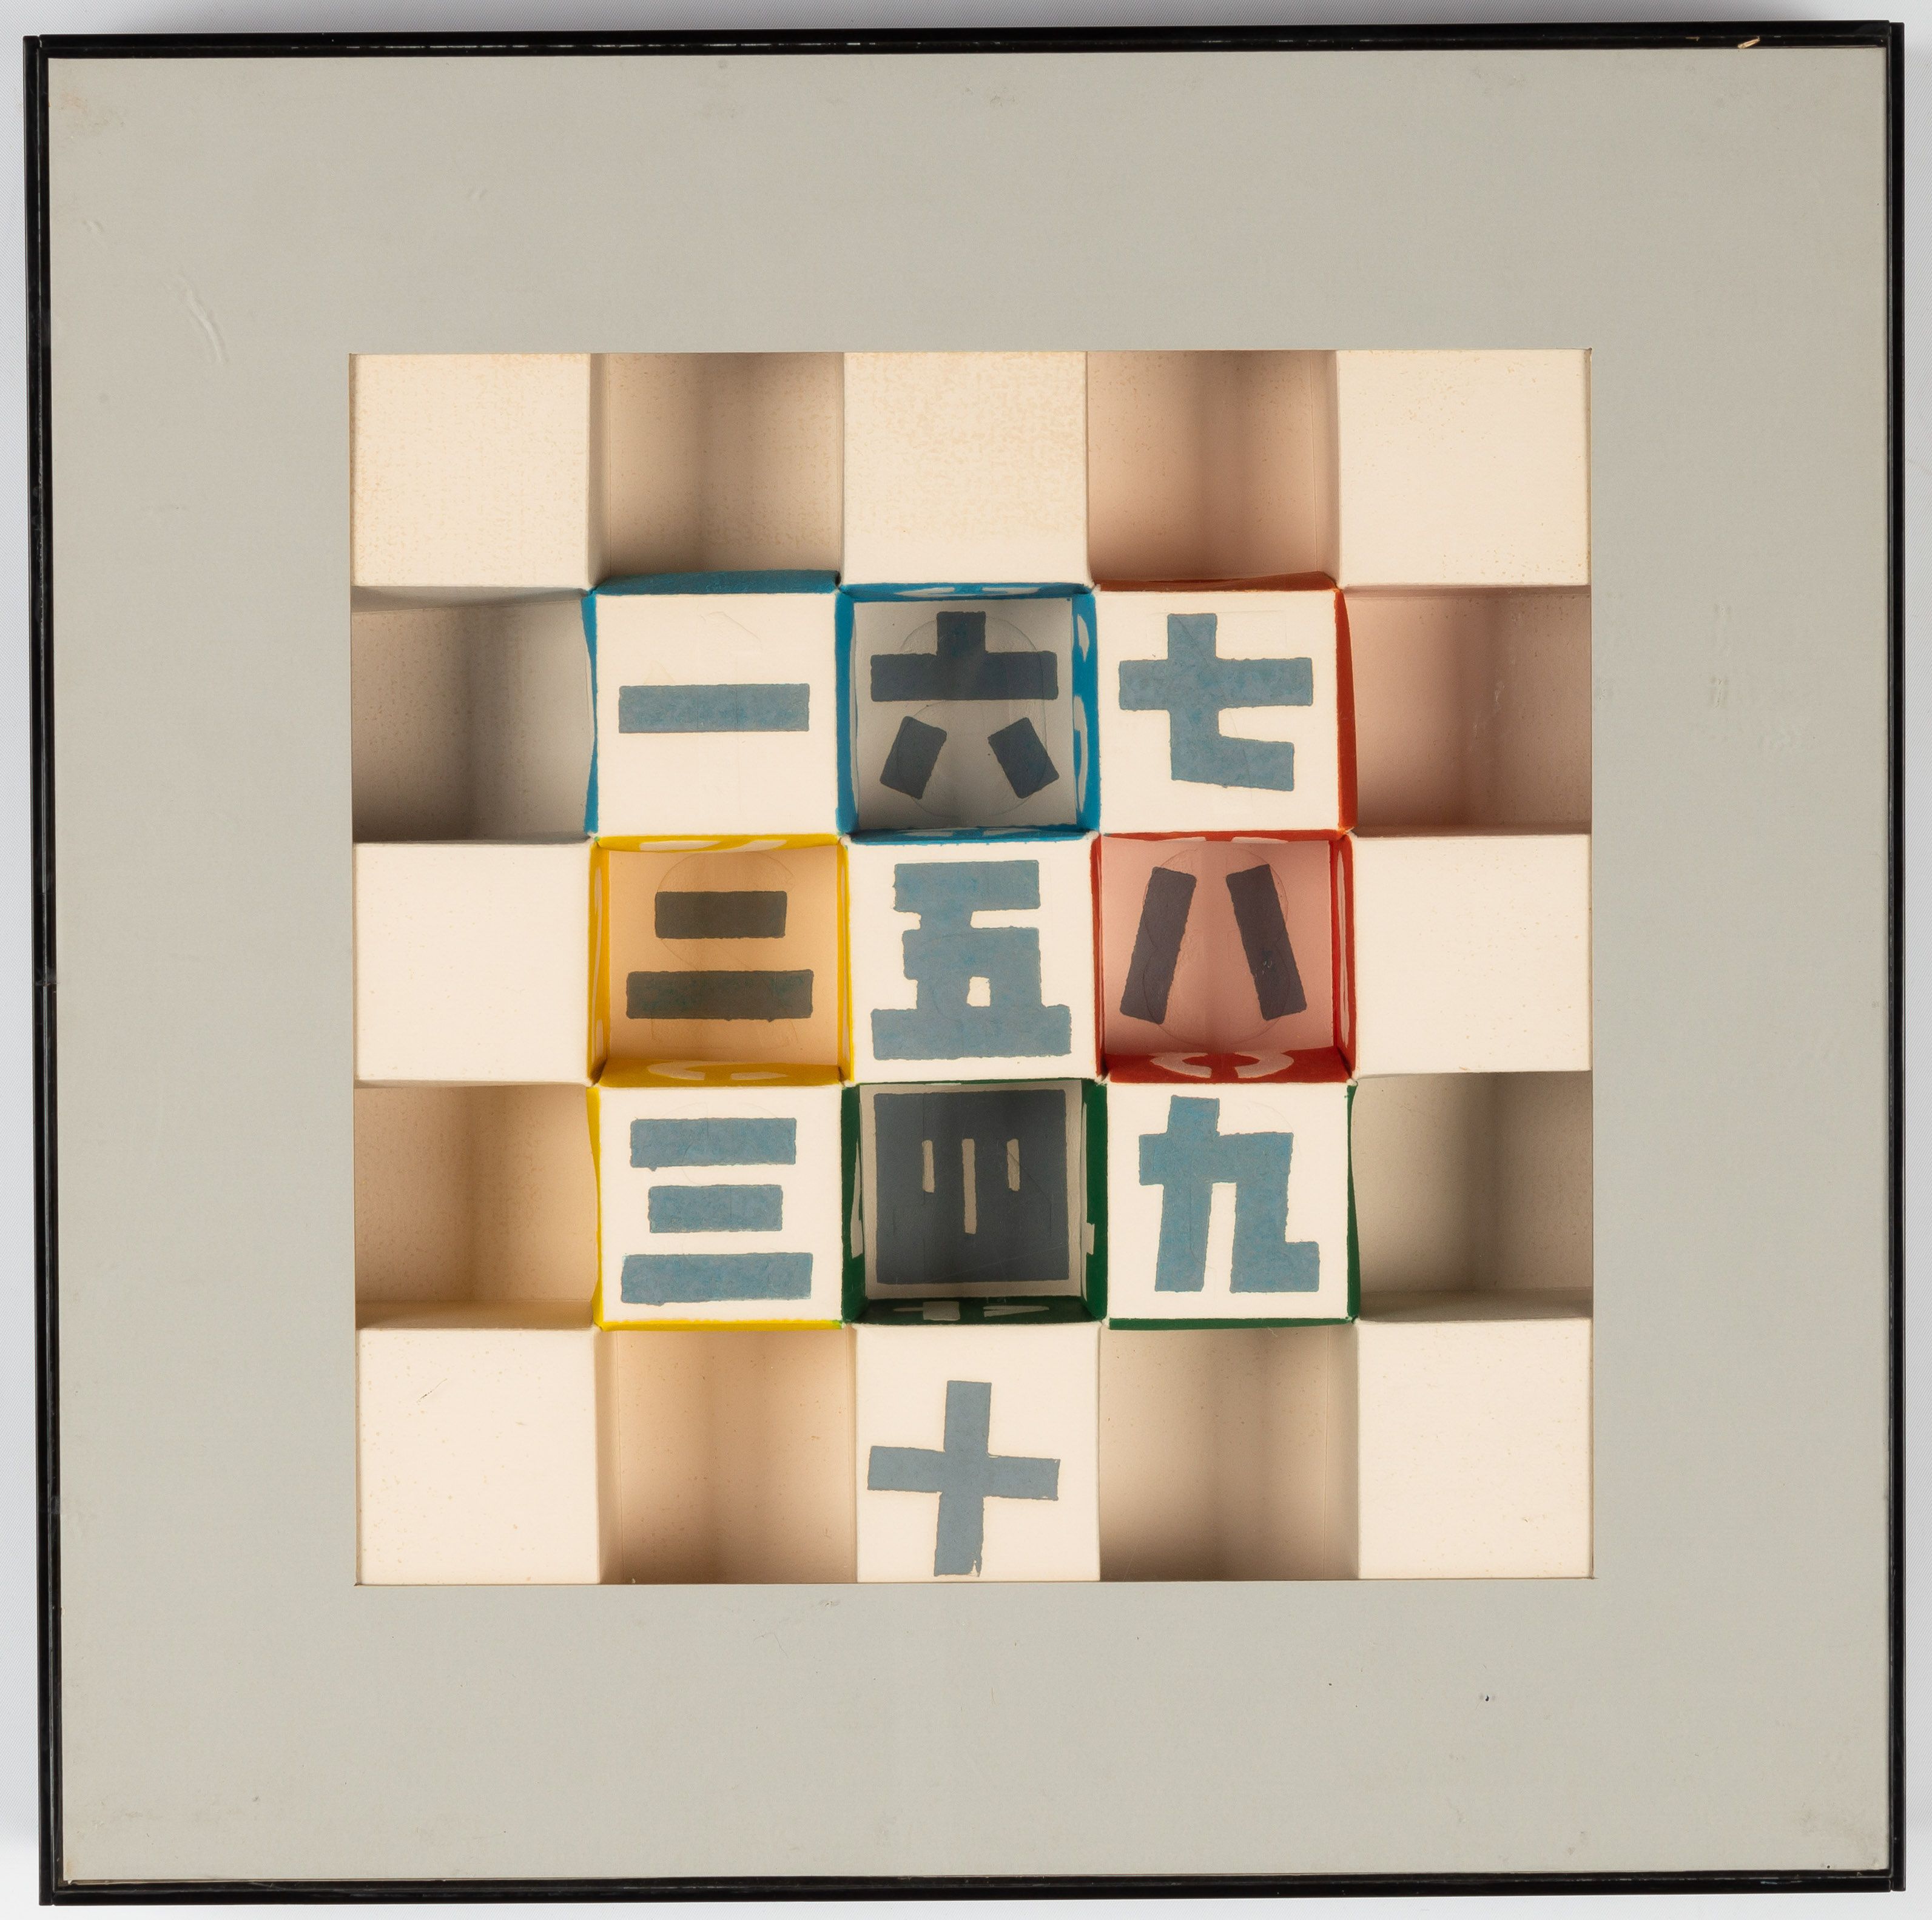 Shiro Ikegawa (Japanese/American, b. 1933) "One of Ten for Jima"